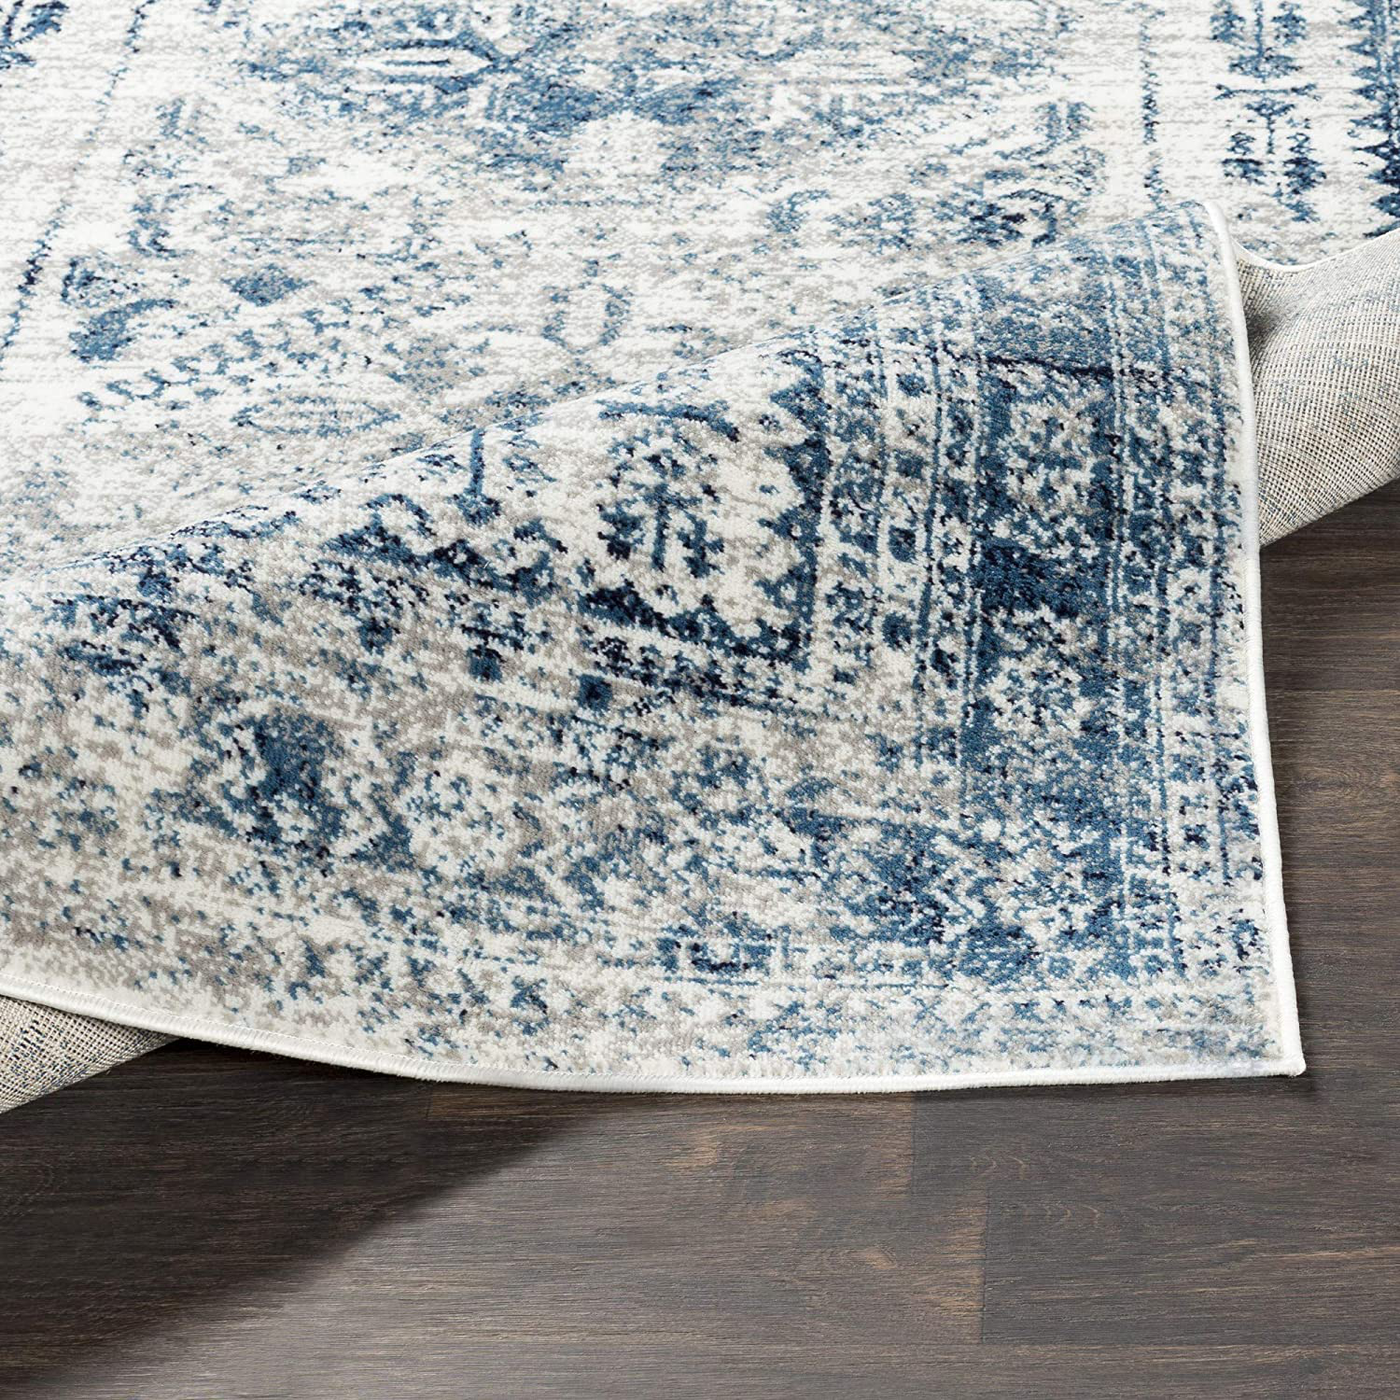 Artistic Weavers Desta Blue/Grey Area Rug, 3'11" x 5'7"